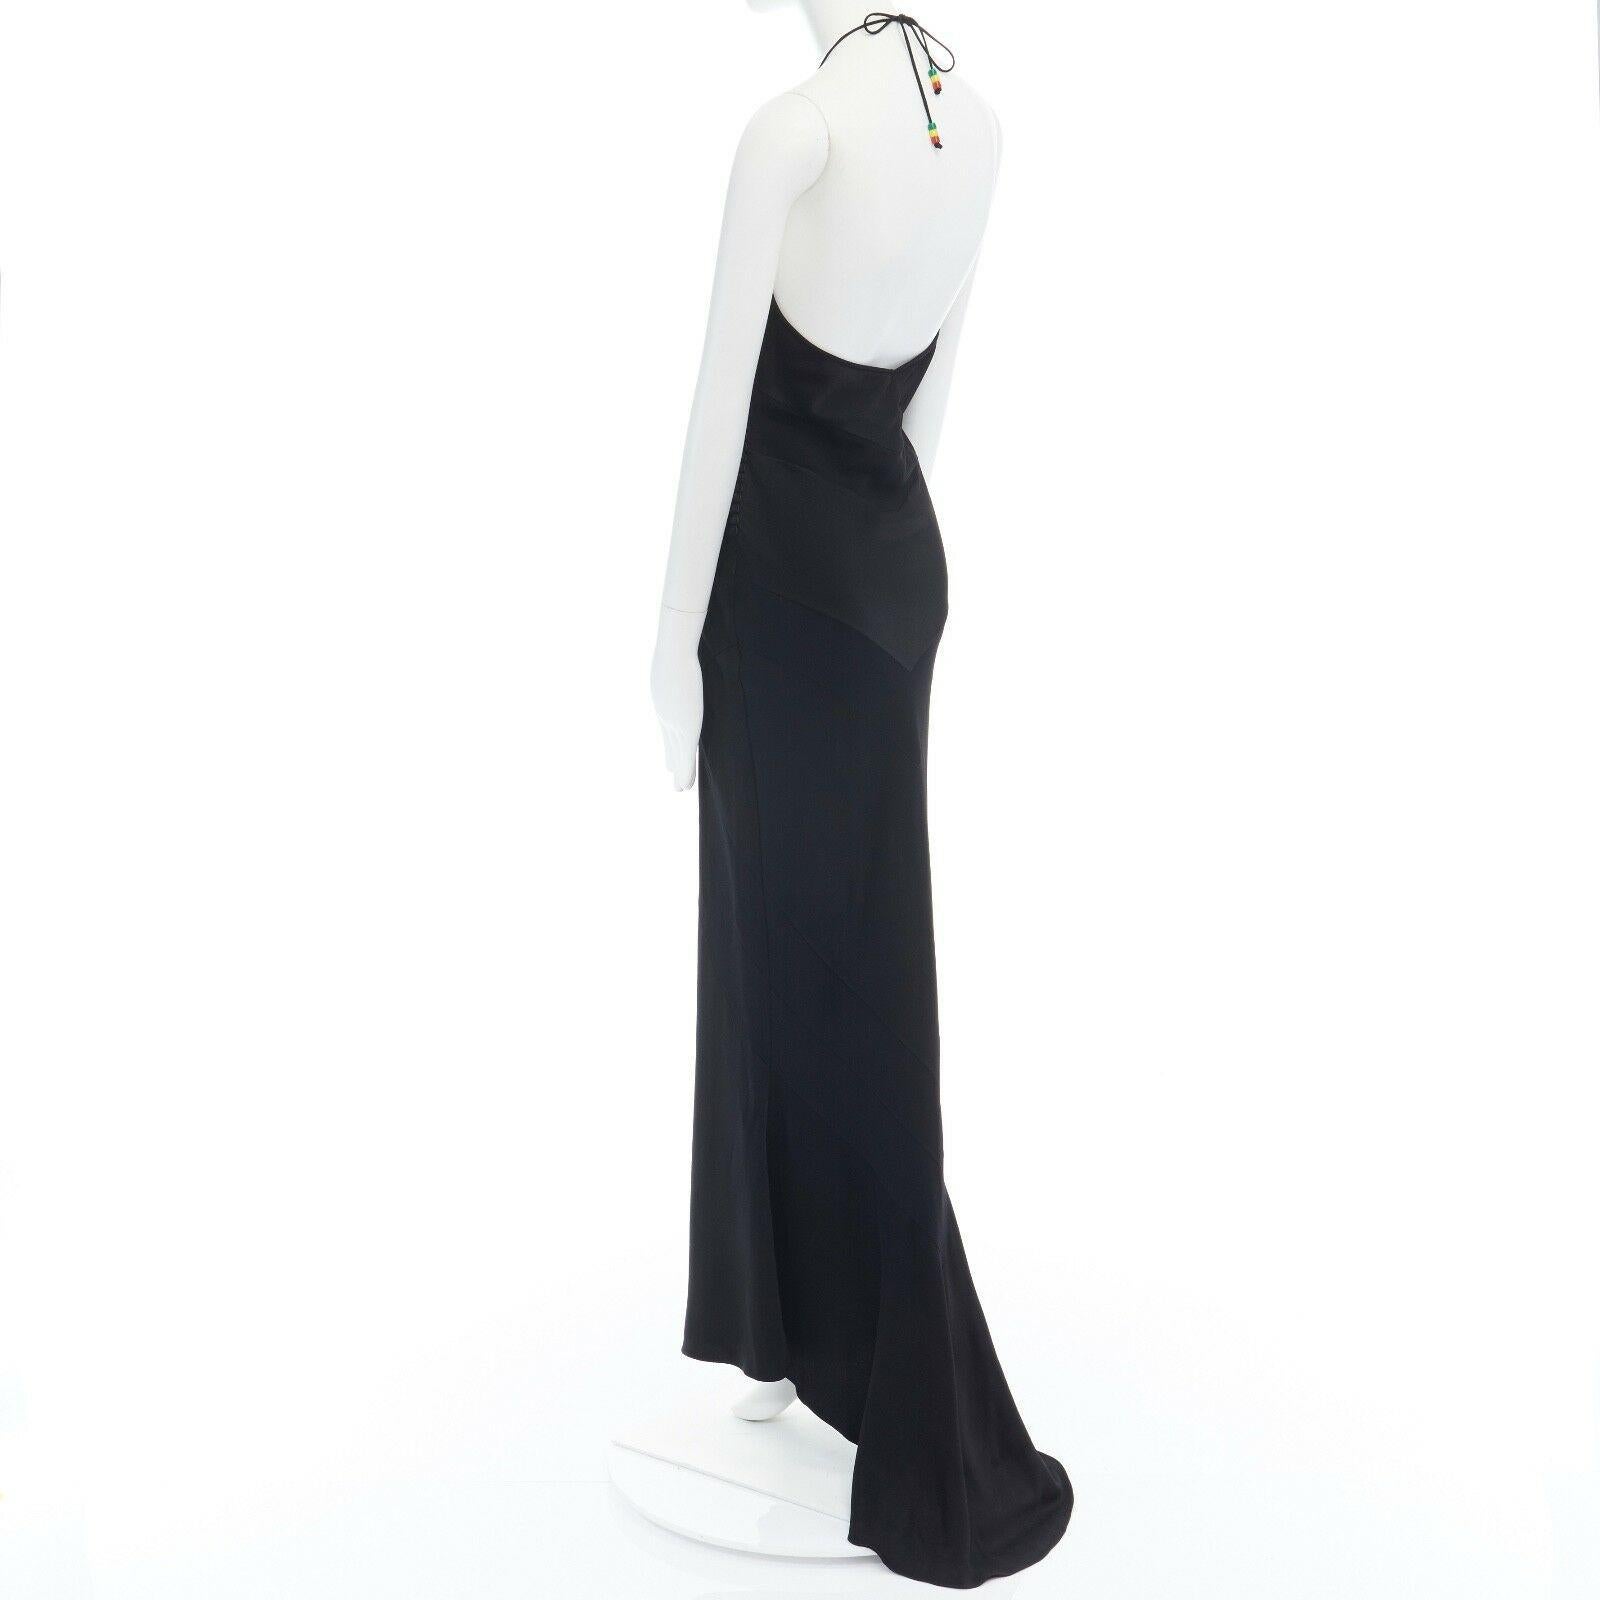 CHRISTIAN DIOR GALLIANO black halter keyhole backless dress gown FR40 US8 UK12 L 1